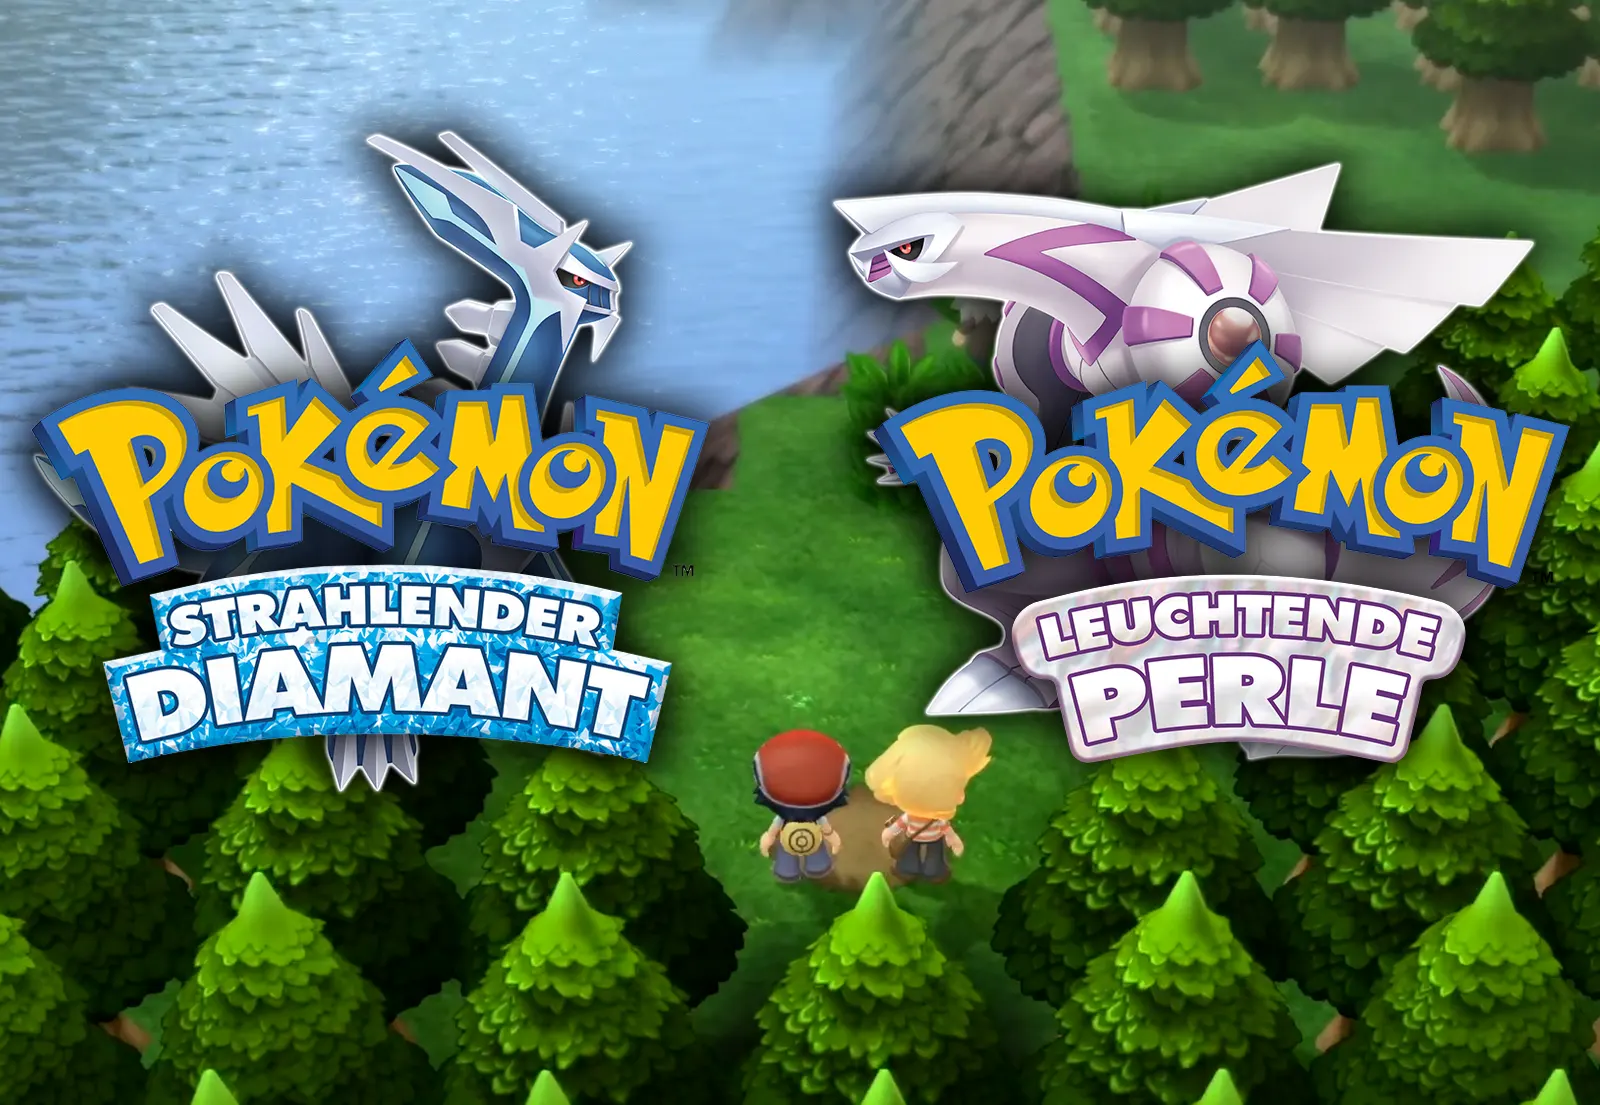 Pokémon Presents – Pokémon Diamond and Pearl Remake